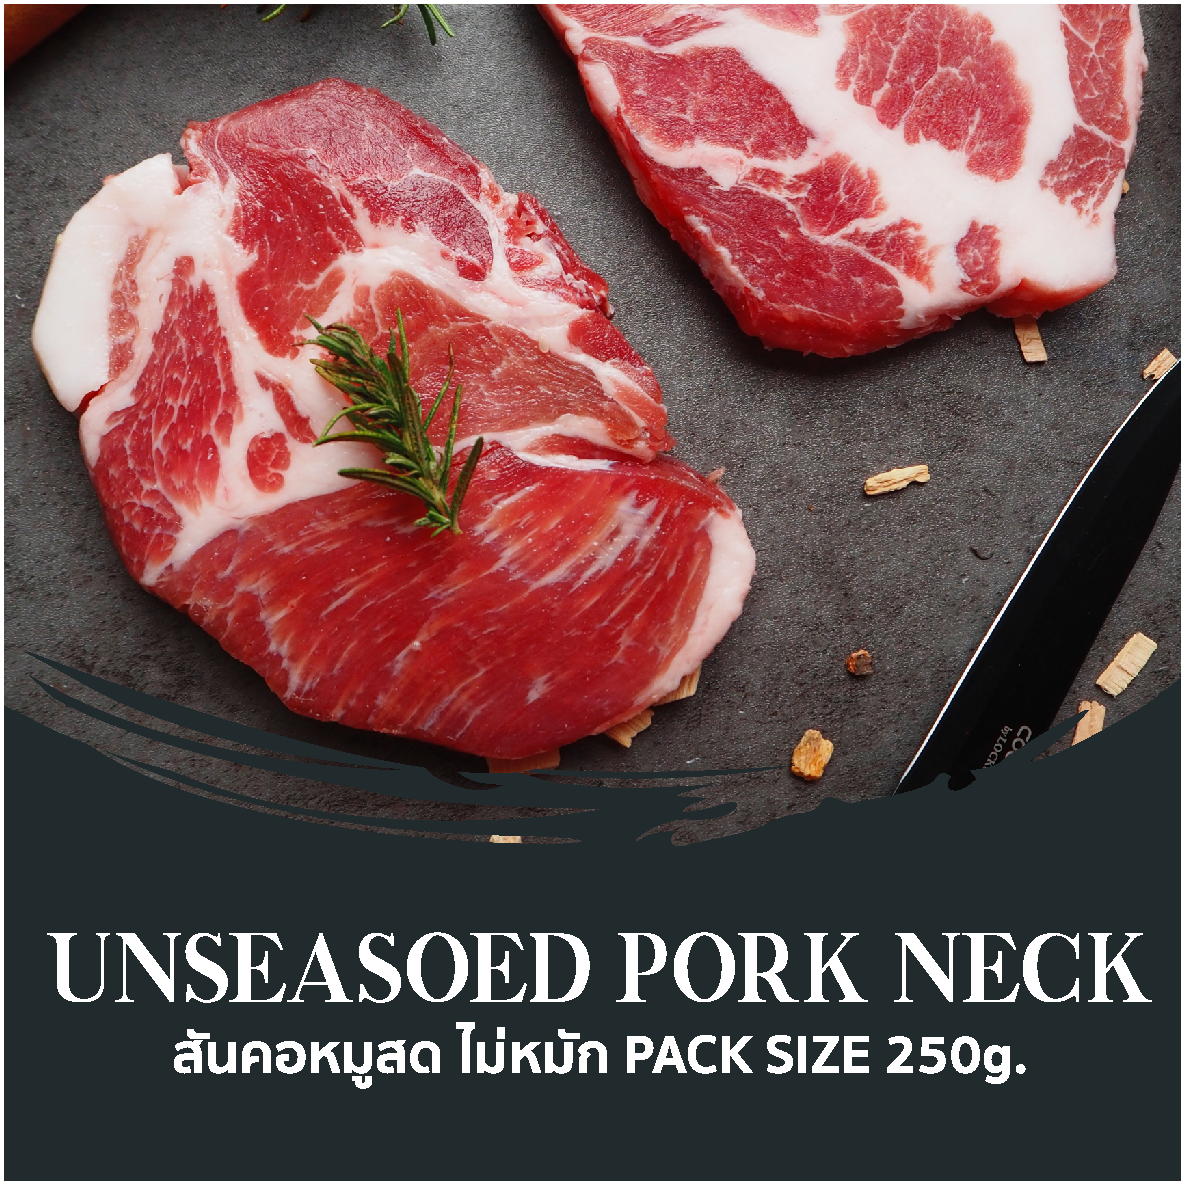 Unseasoned Pork Neck Steak